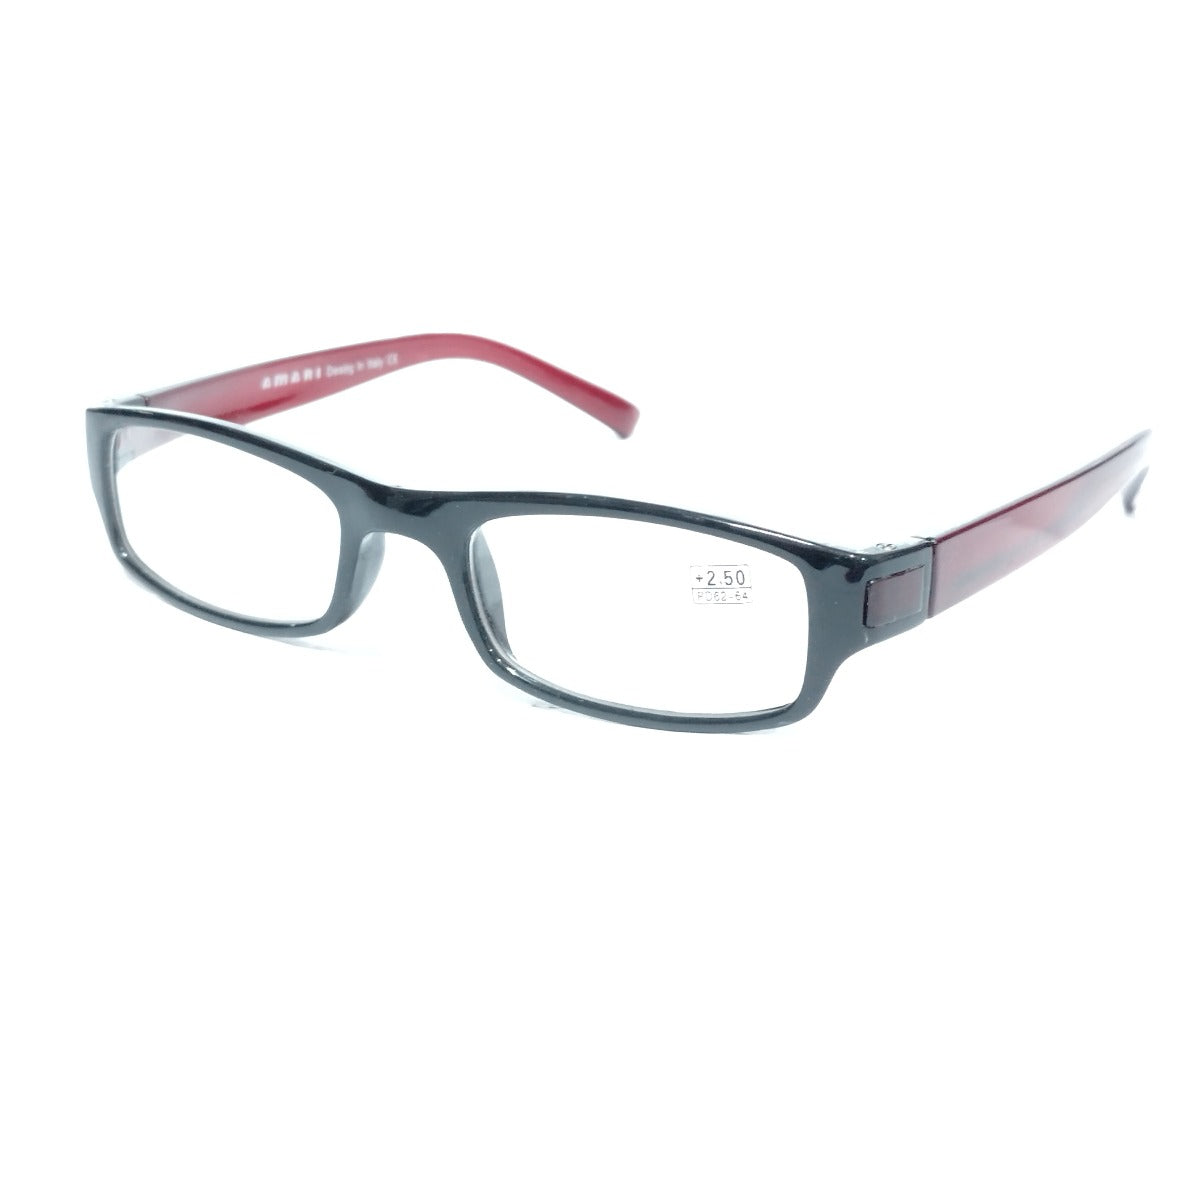 Blue Light Blocking Computer Reading Glasses - Full Frame Black Front, Red Side